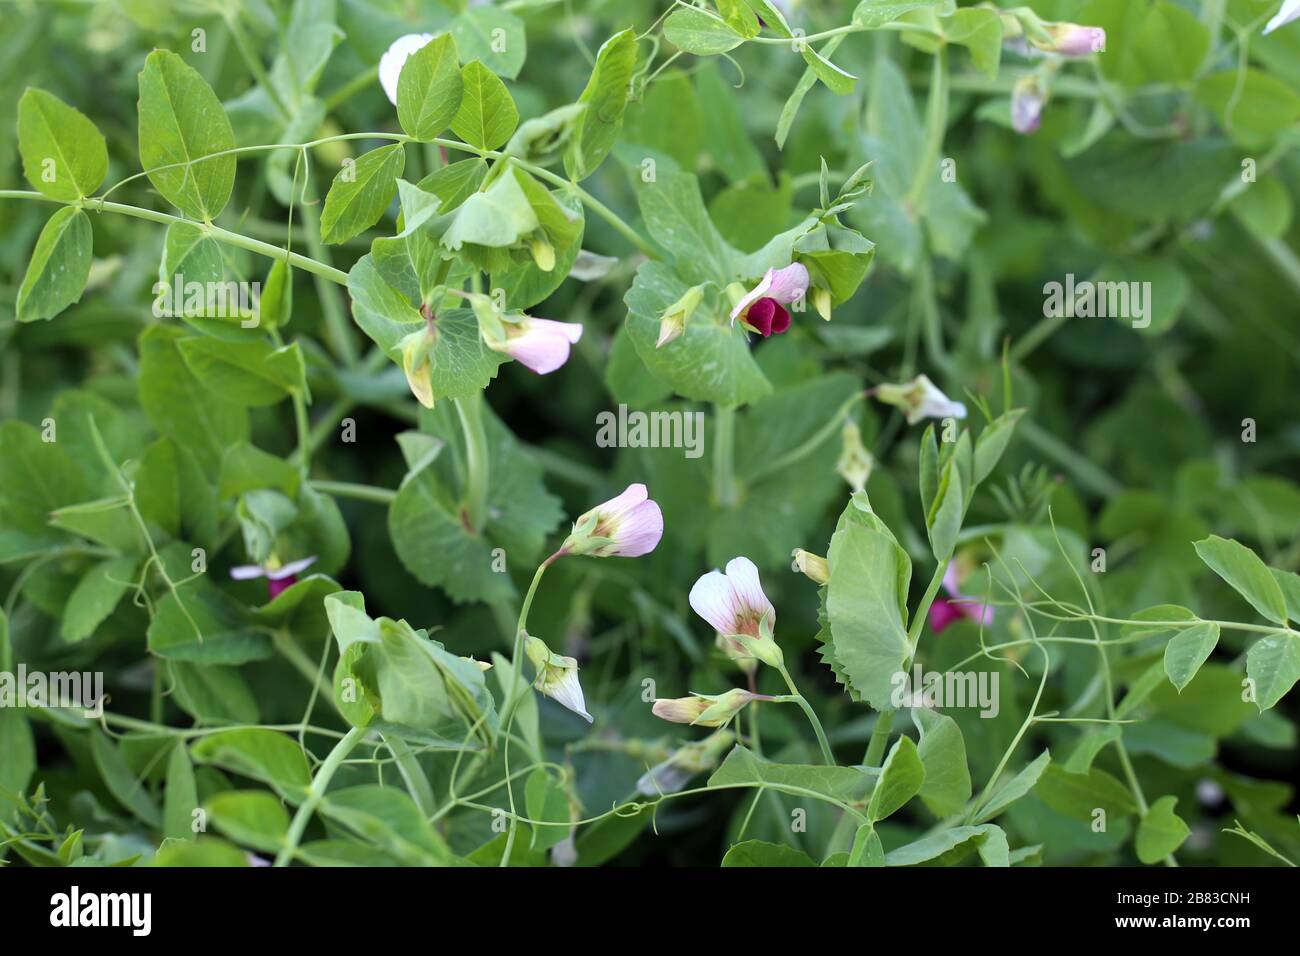 fresh mature pods with garden peas Stock Photo